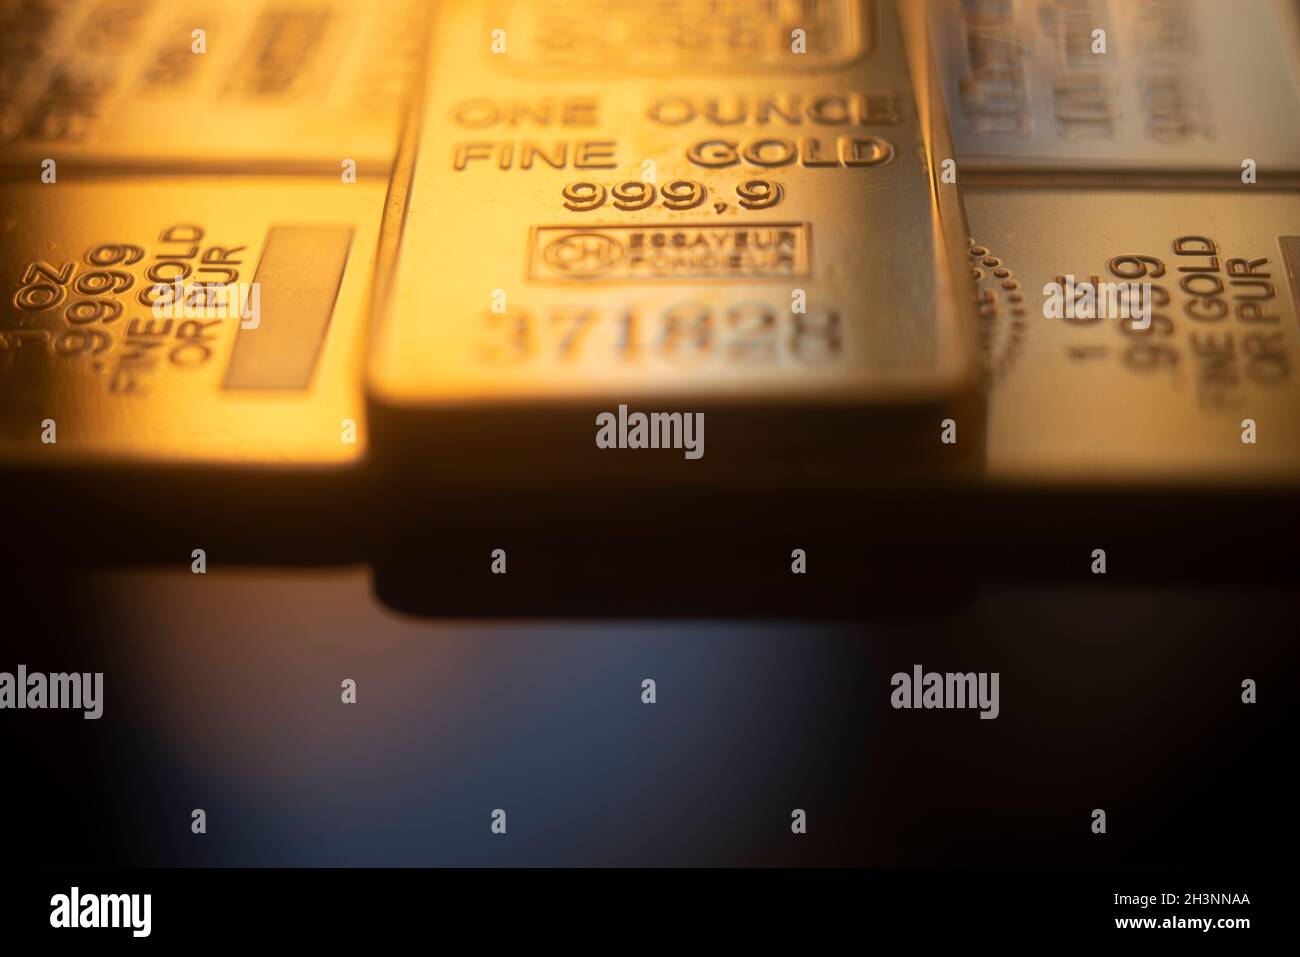 Solid pure 999.9 gold bullion ingot bars photo. Stock Photo